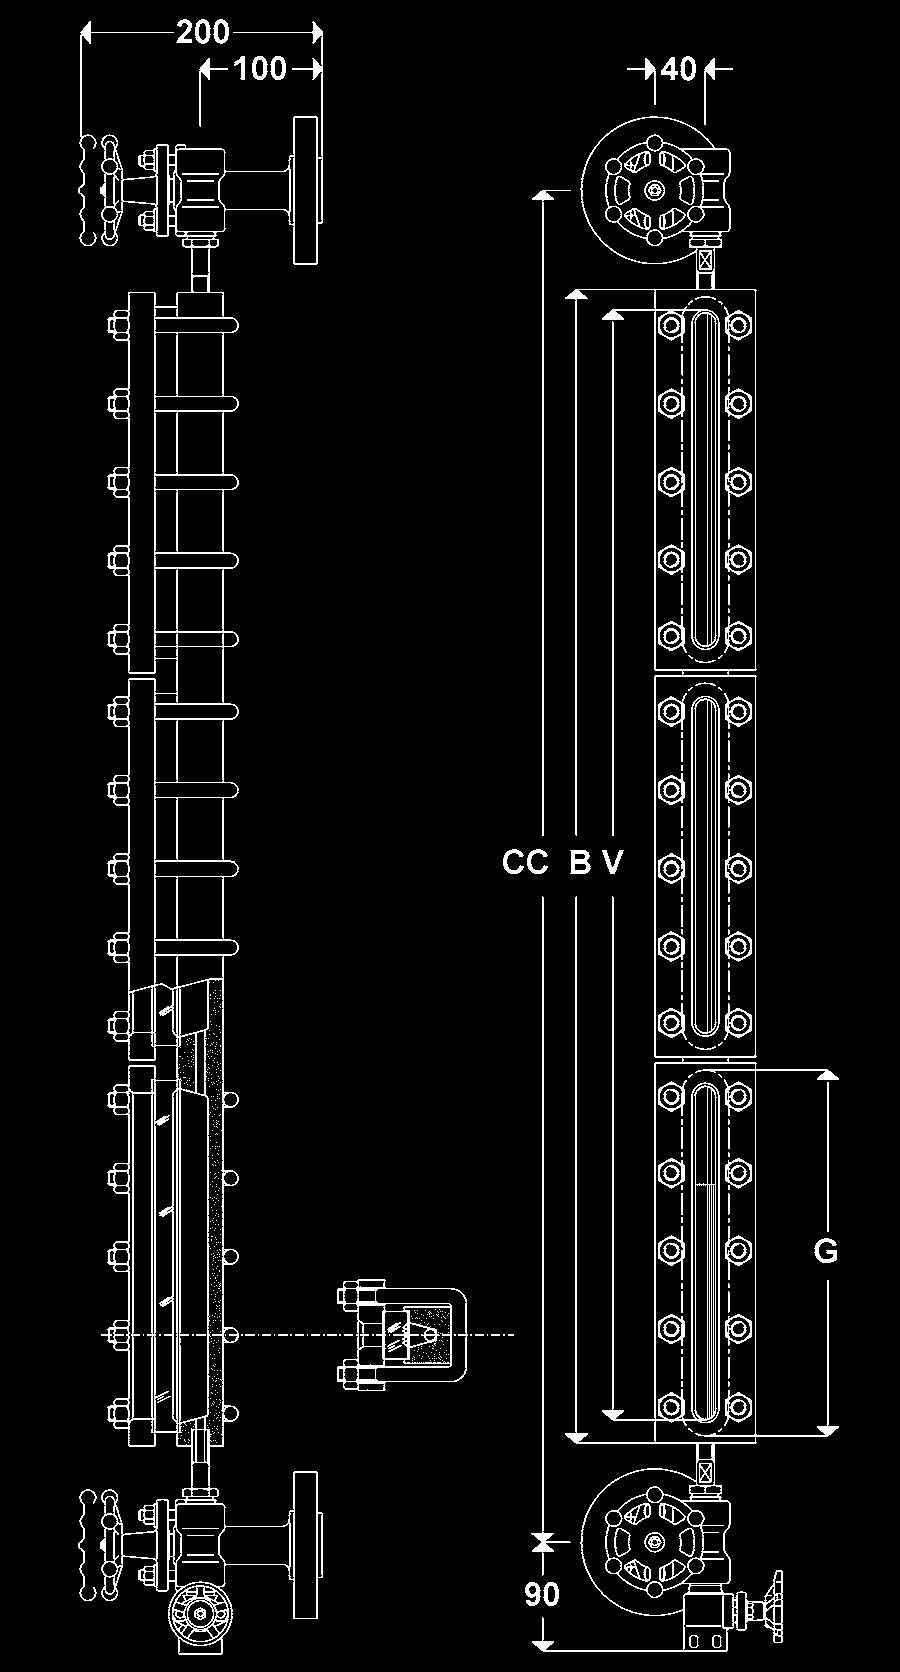 Reflex Level Gauges type BR23 GP11, GP12, G41/42 and GS41/42 valves Fig. 839.